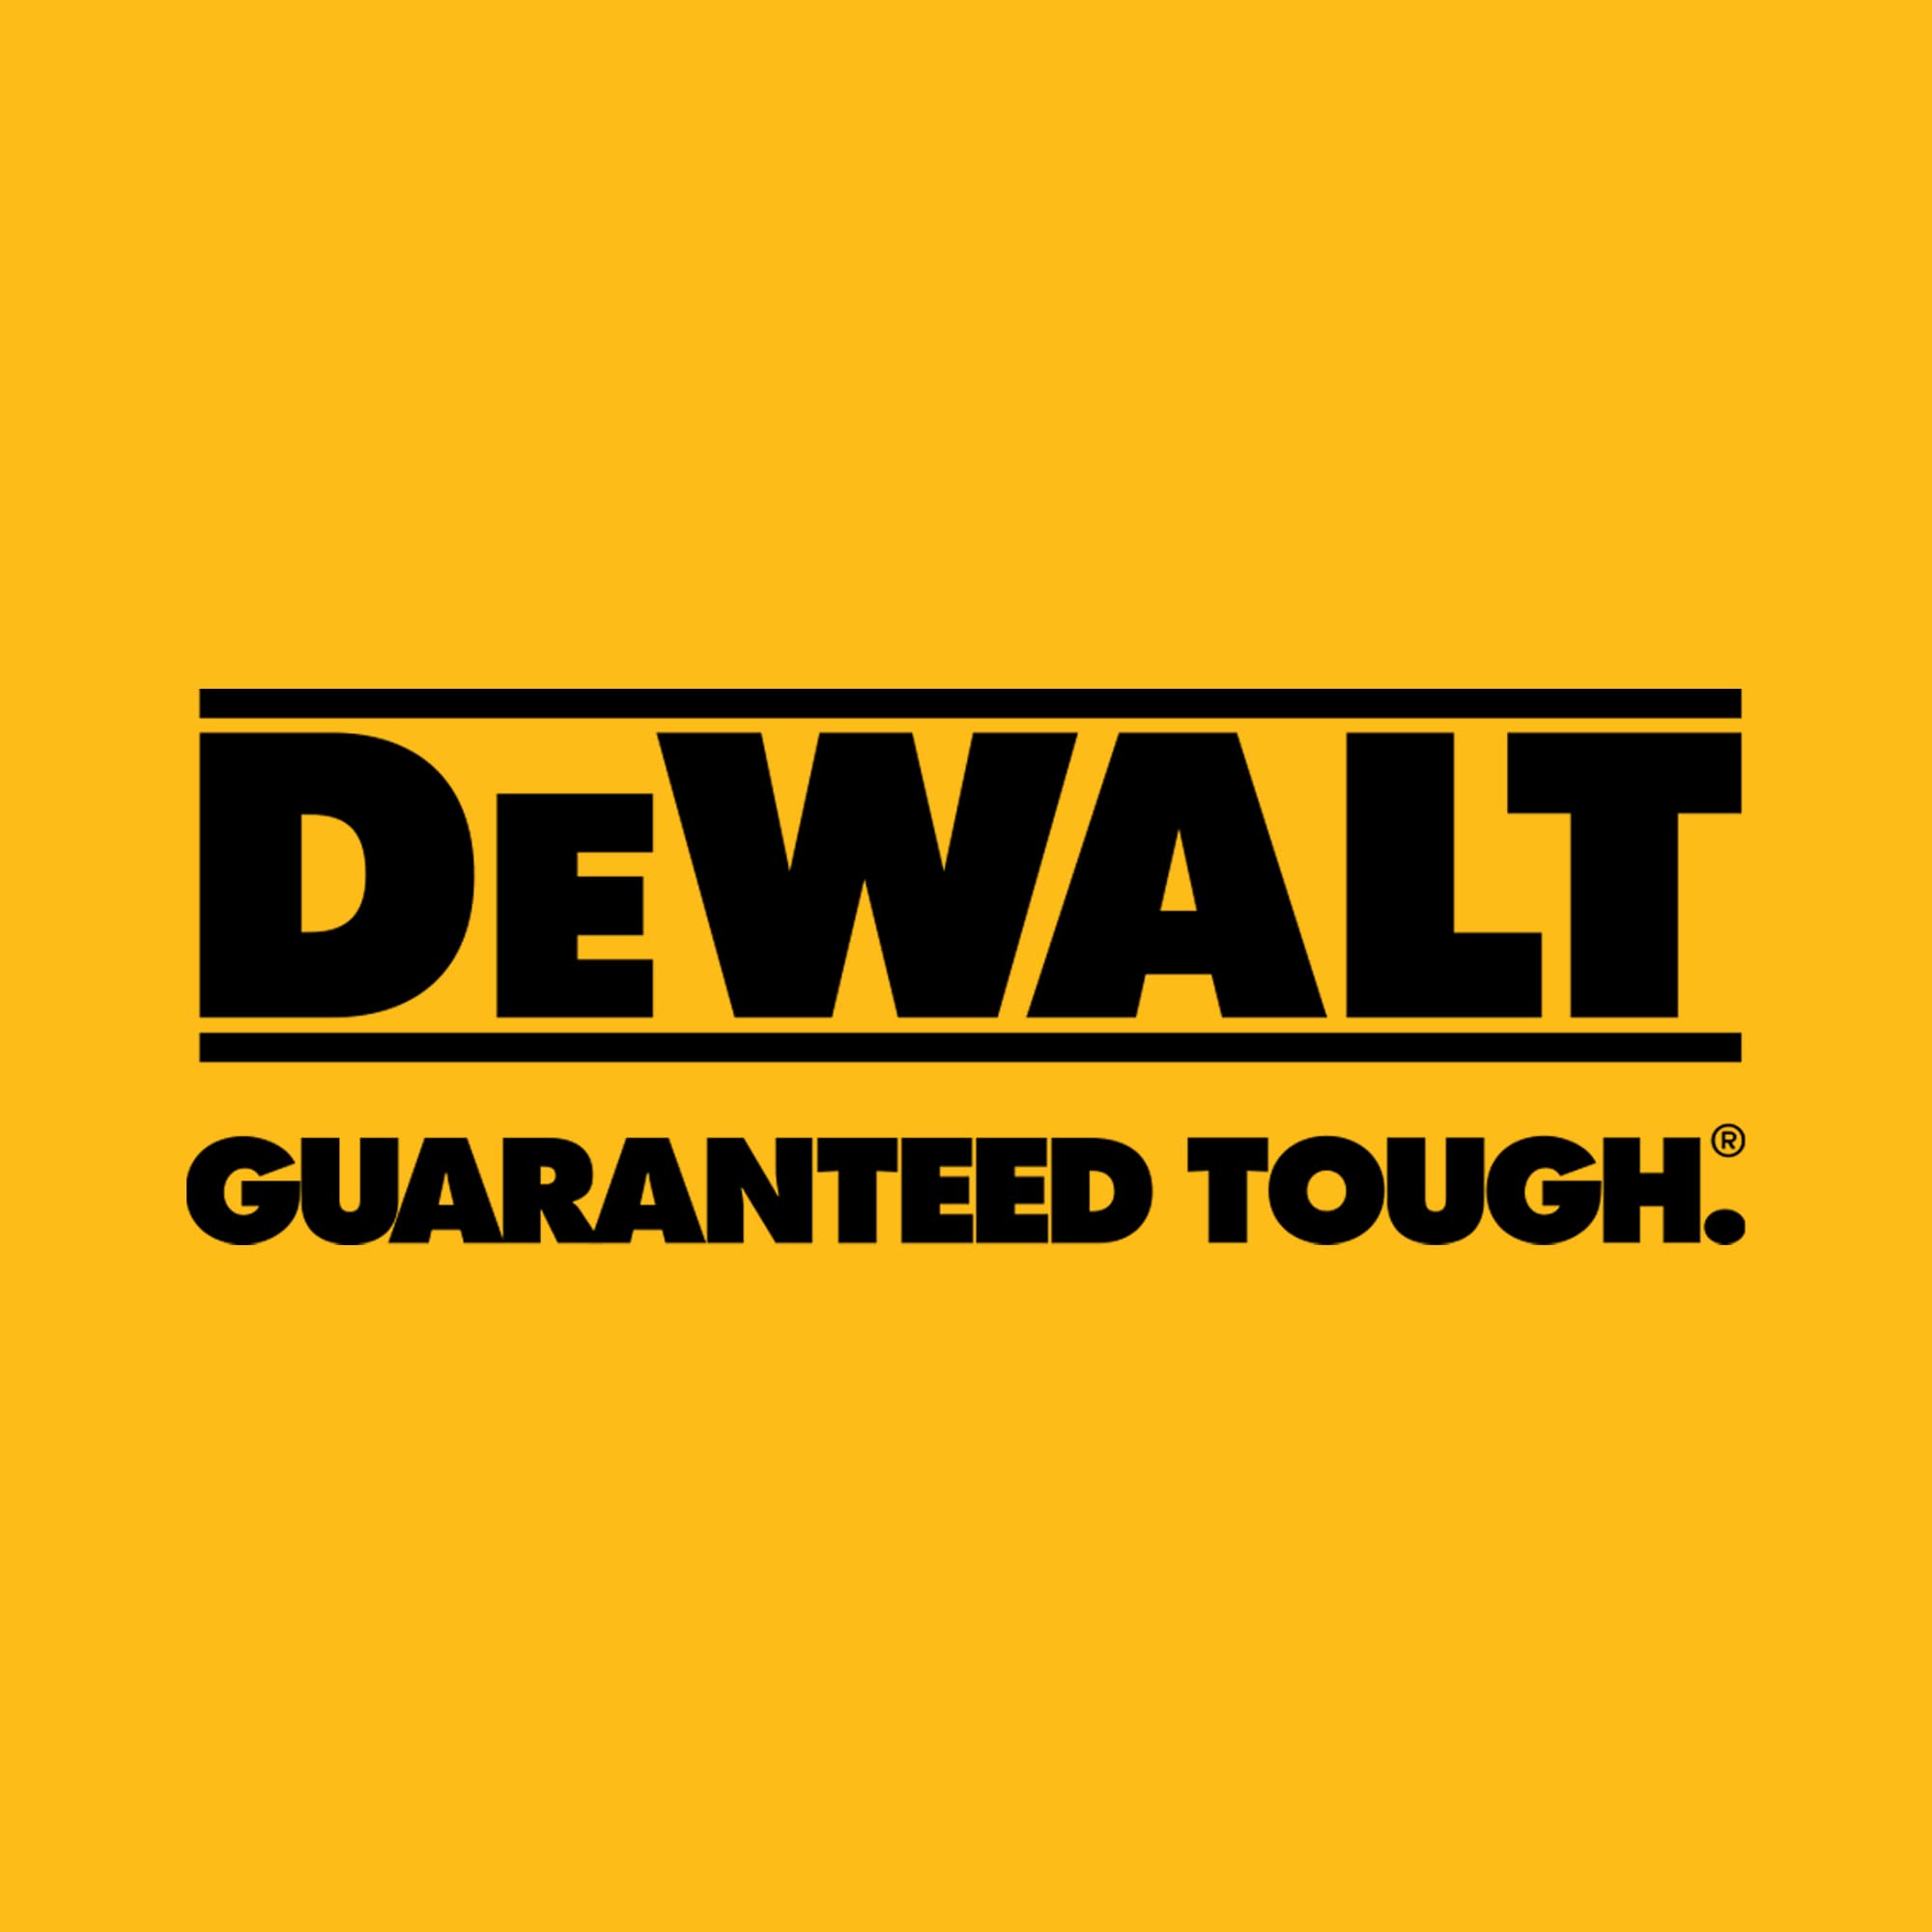 DEWALT Screwdriver Bit Set with Tough Case, 45-Piece (DW2166),Grey/Silver Screwdriving Set With Tough Case